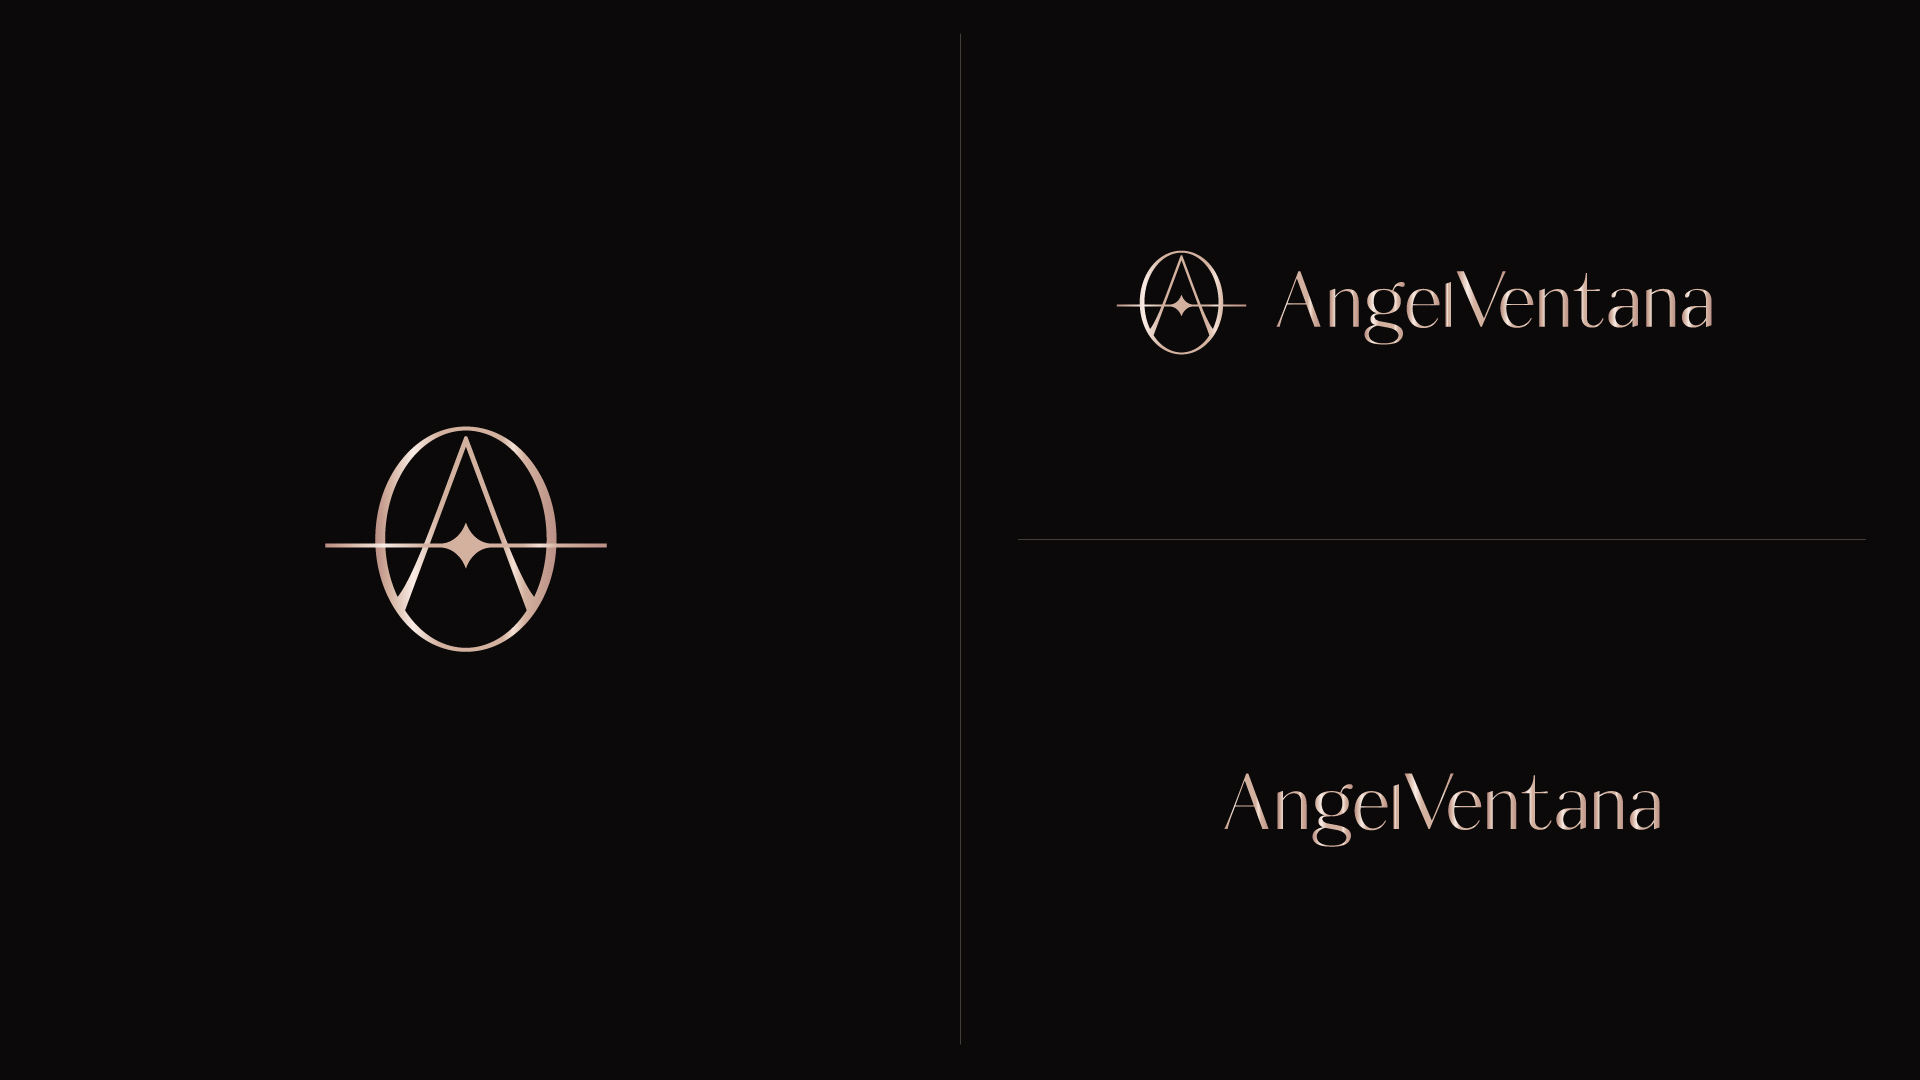 Angelventana品牌形象设计提案-09.jpg